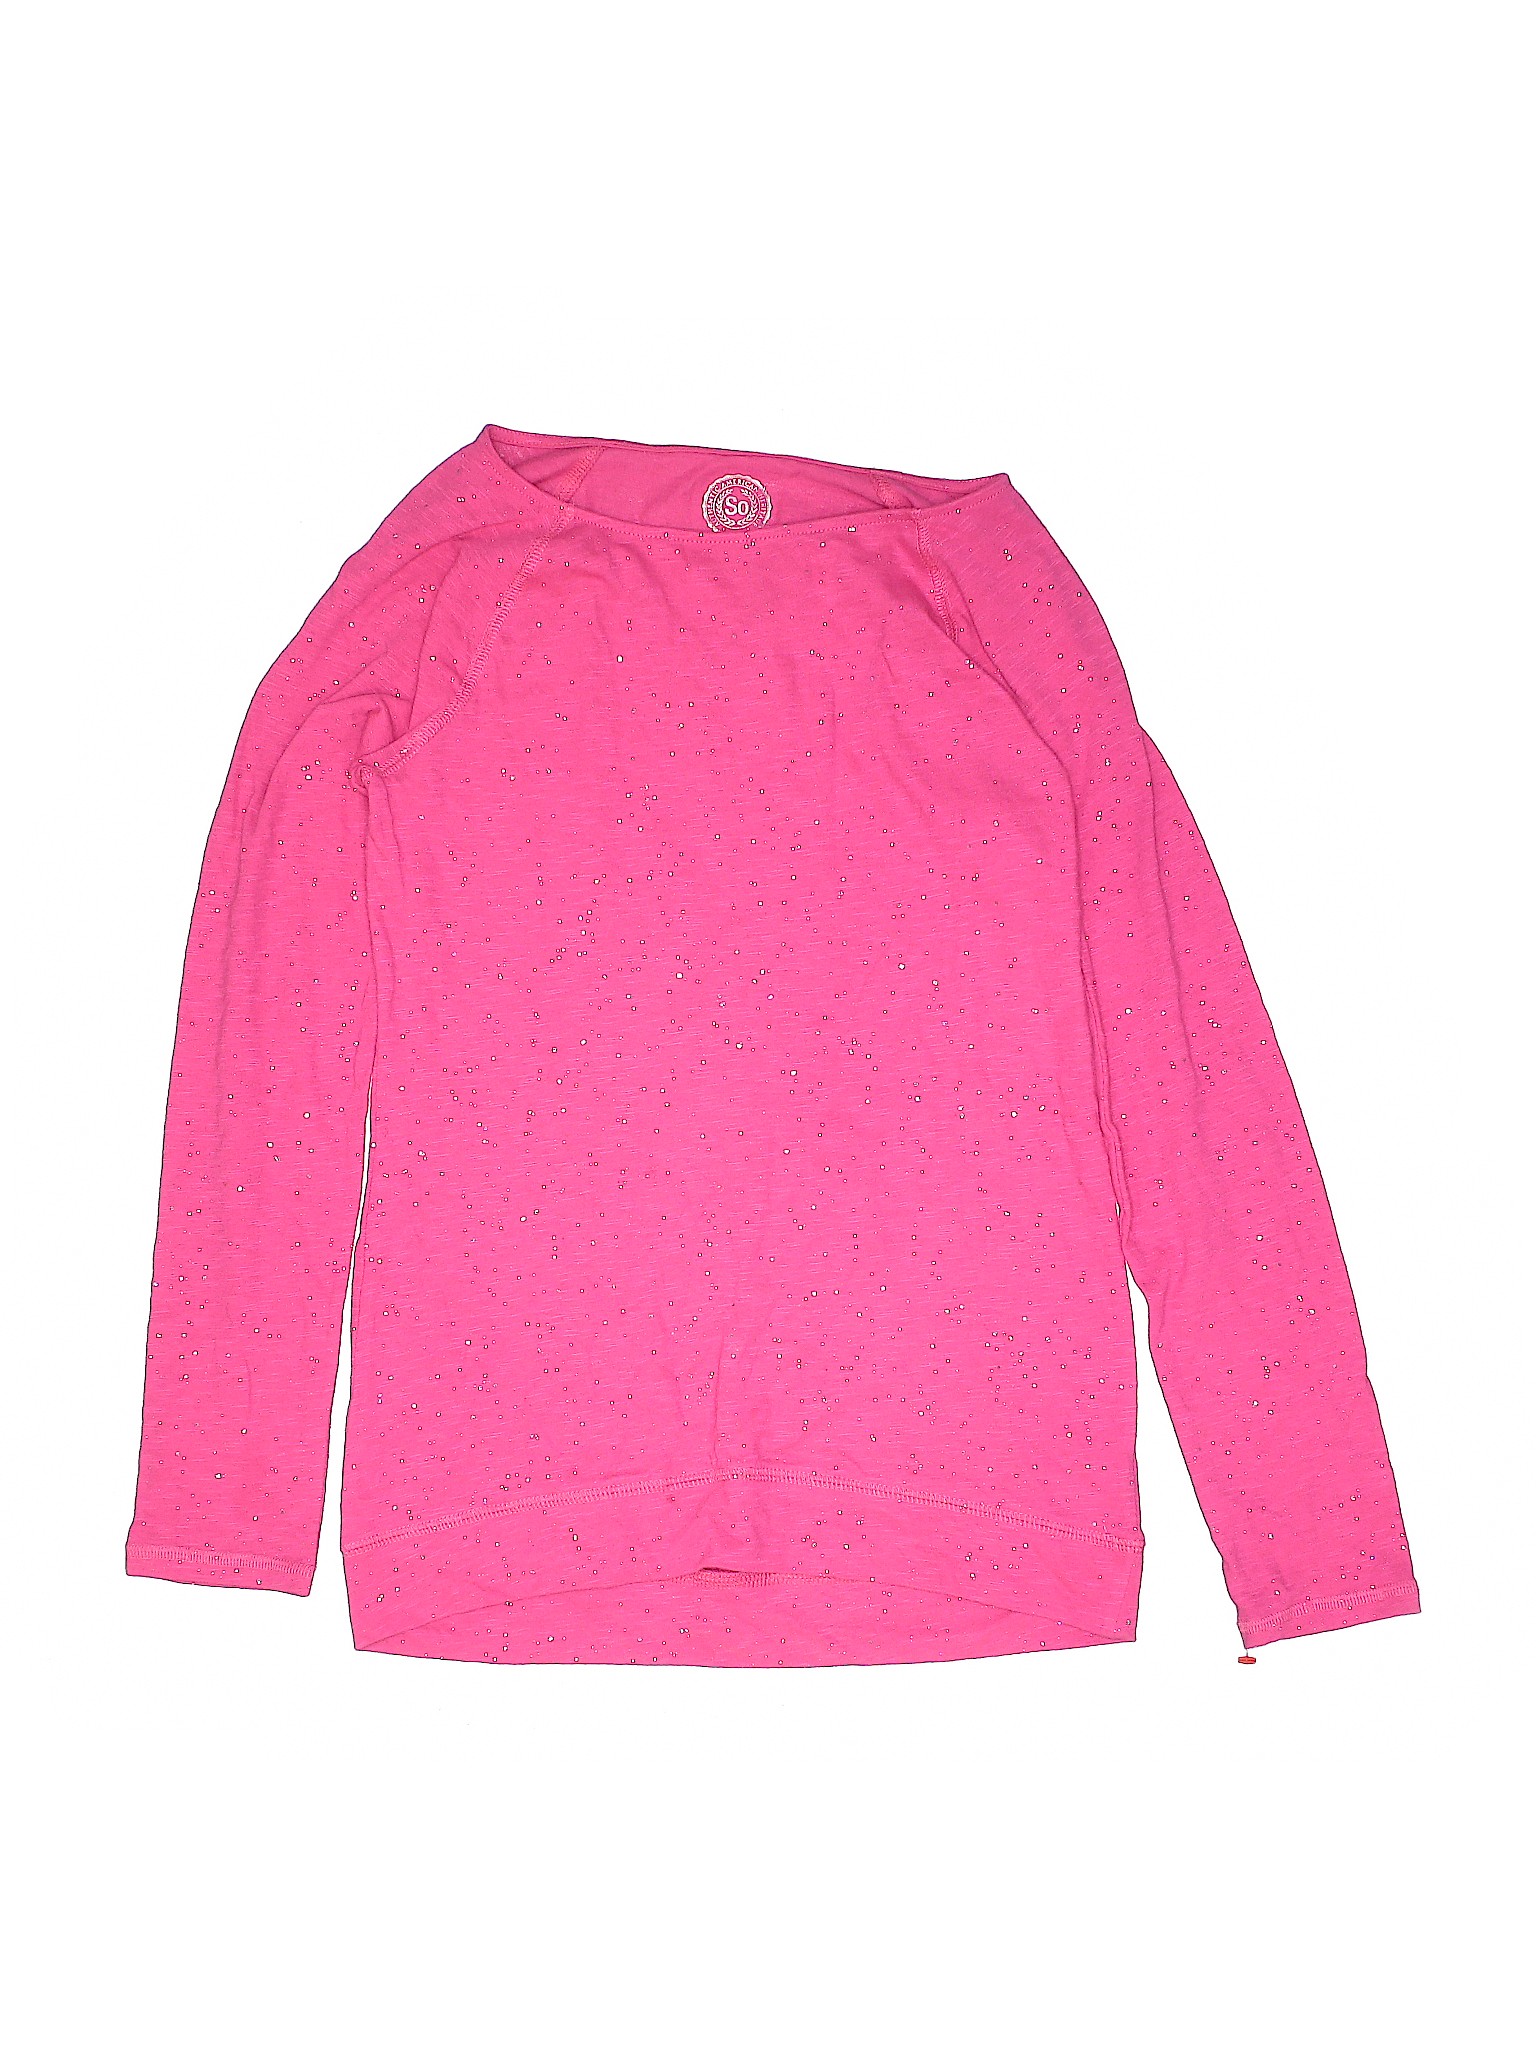 SO Girls Pink Long Sleeve T-Shirt 12 | eBay